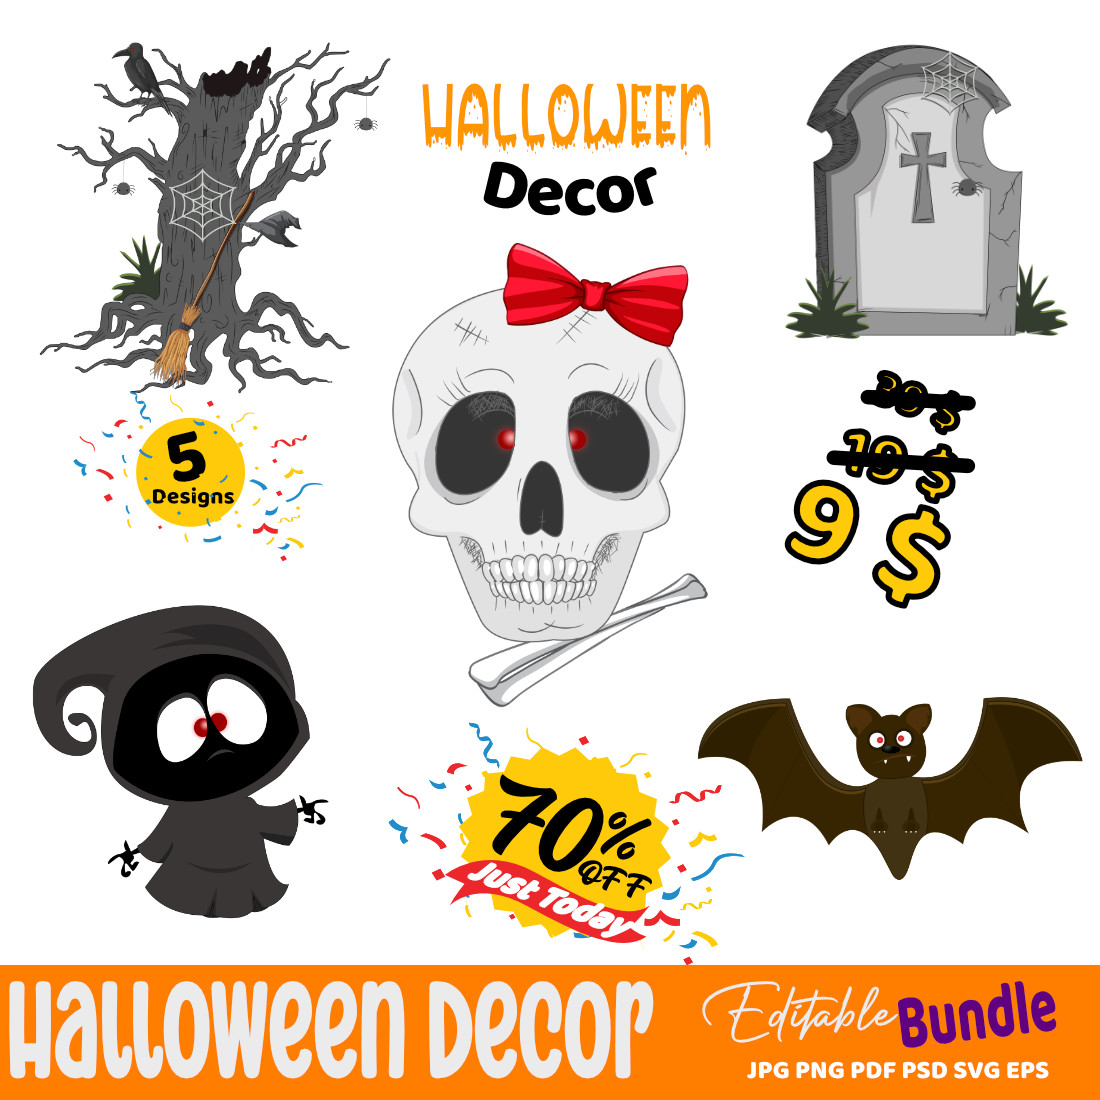 Halloween Spooky Bundle - 5 Designs facebook image.